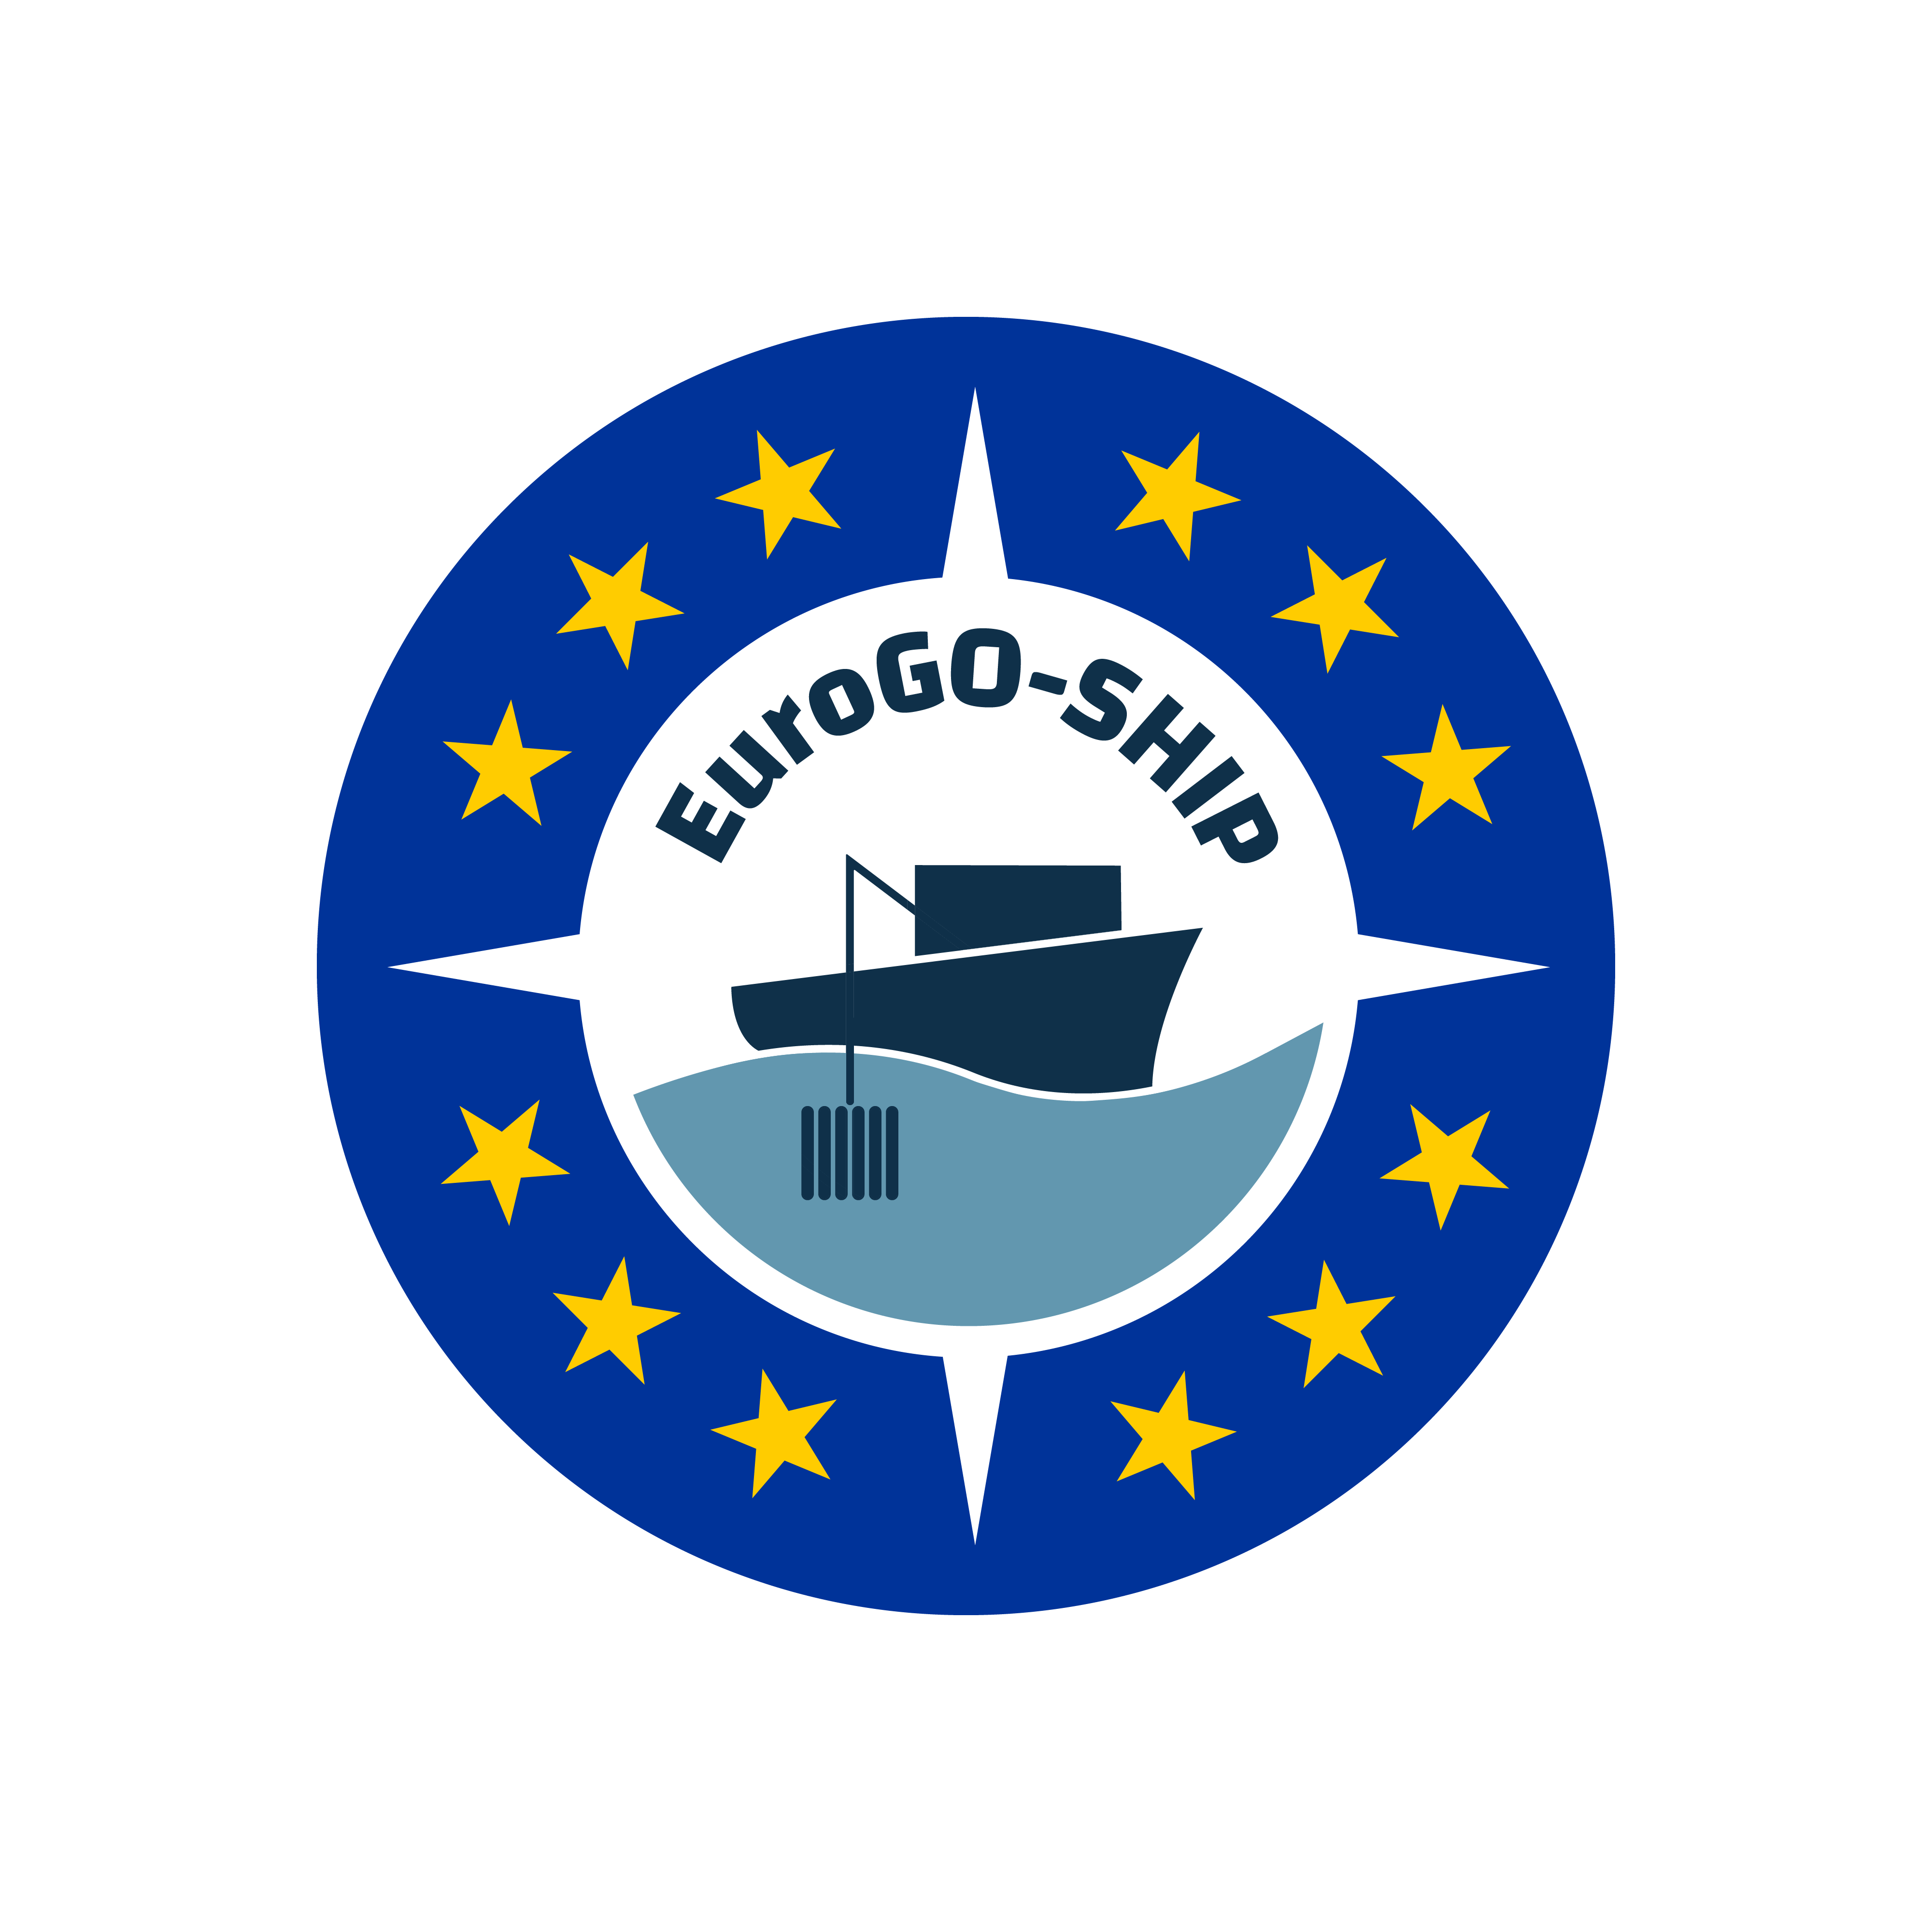 EUROGO-SHIP | ISMAR